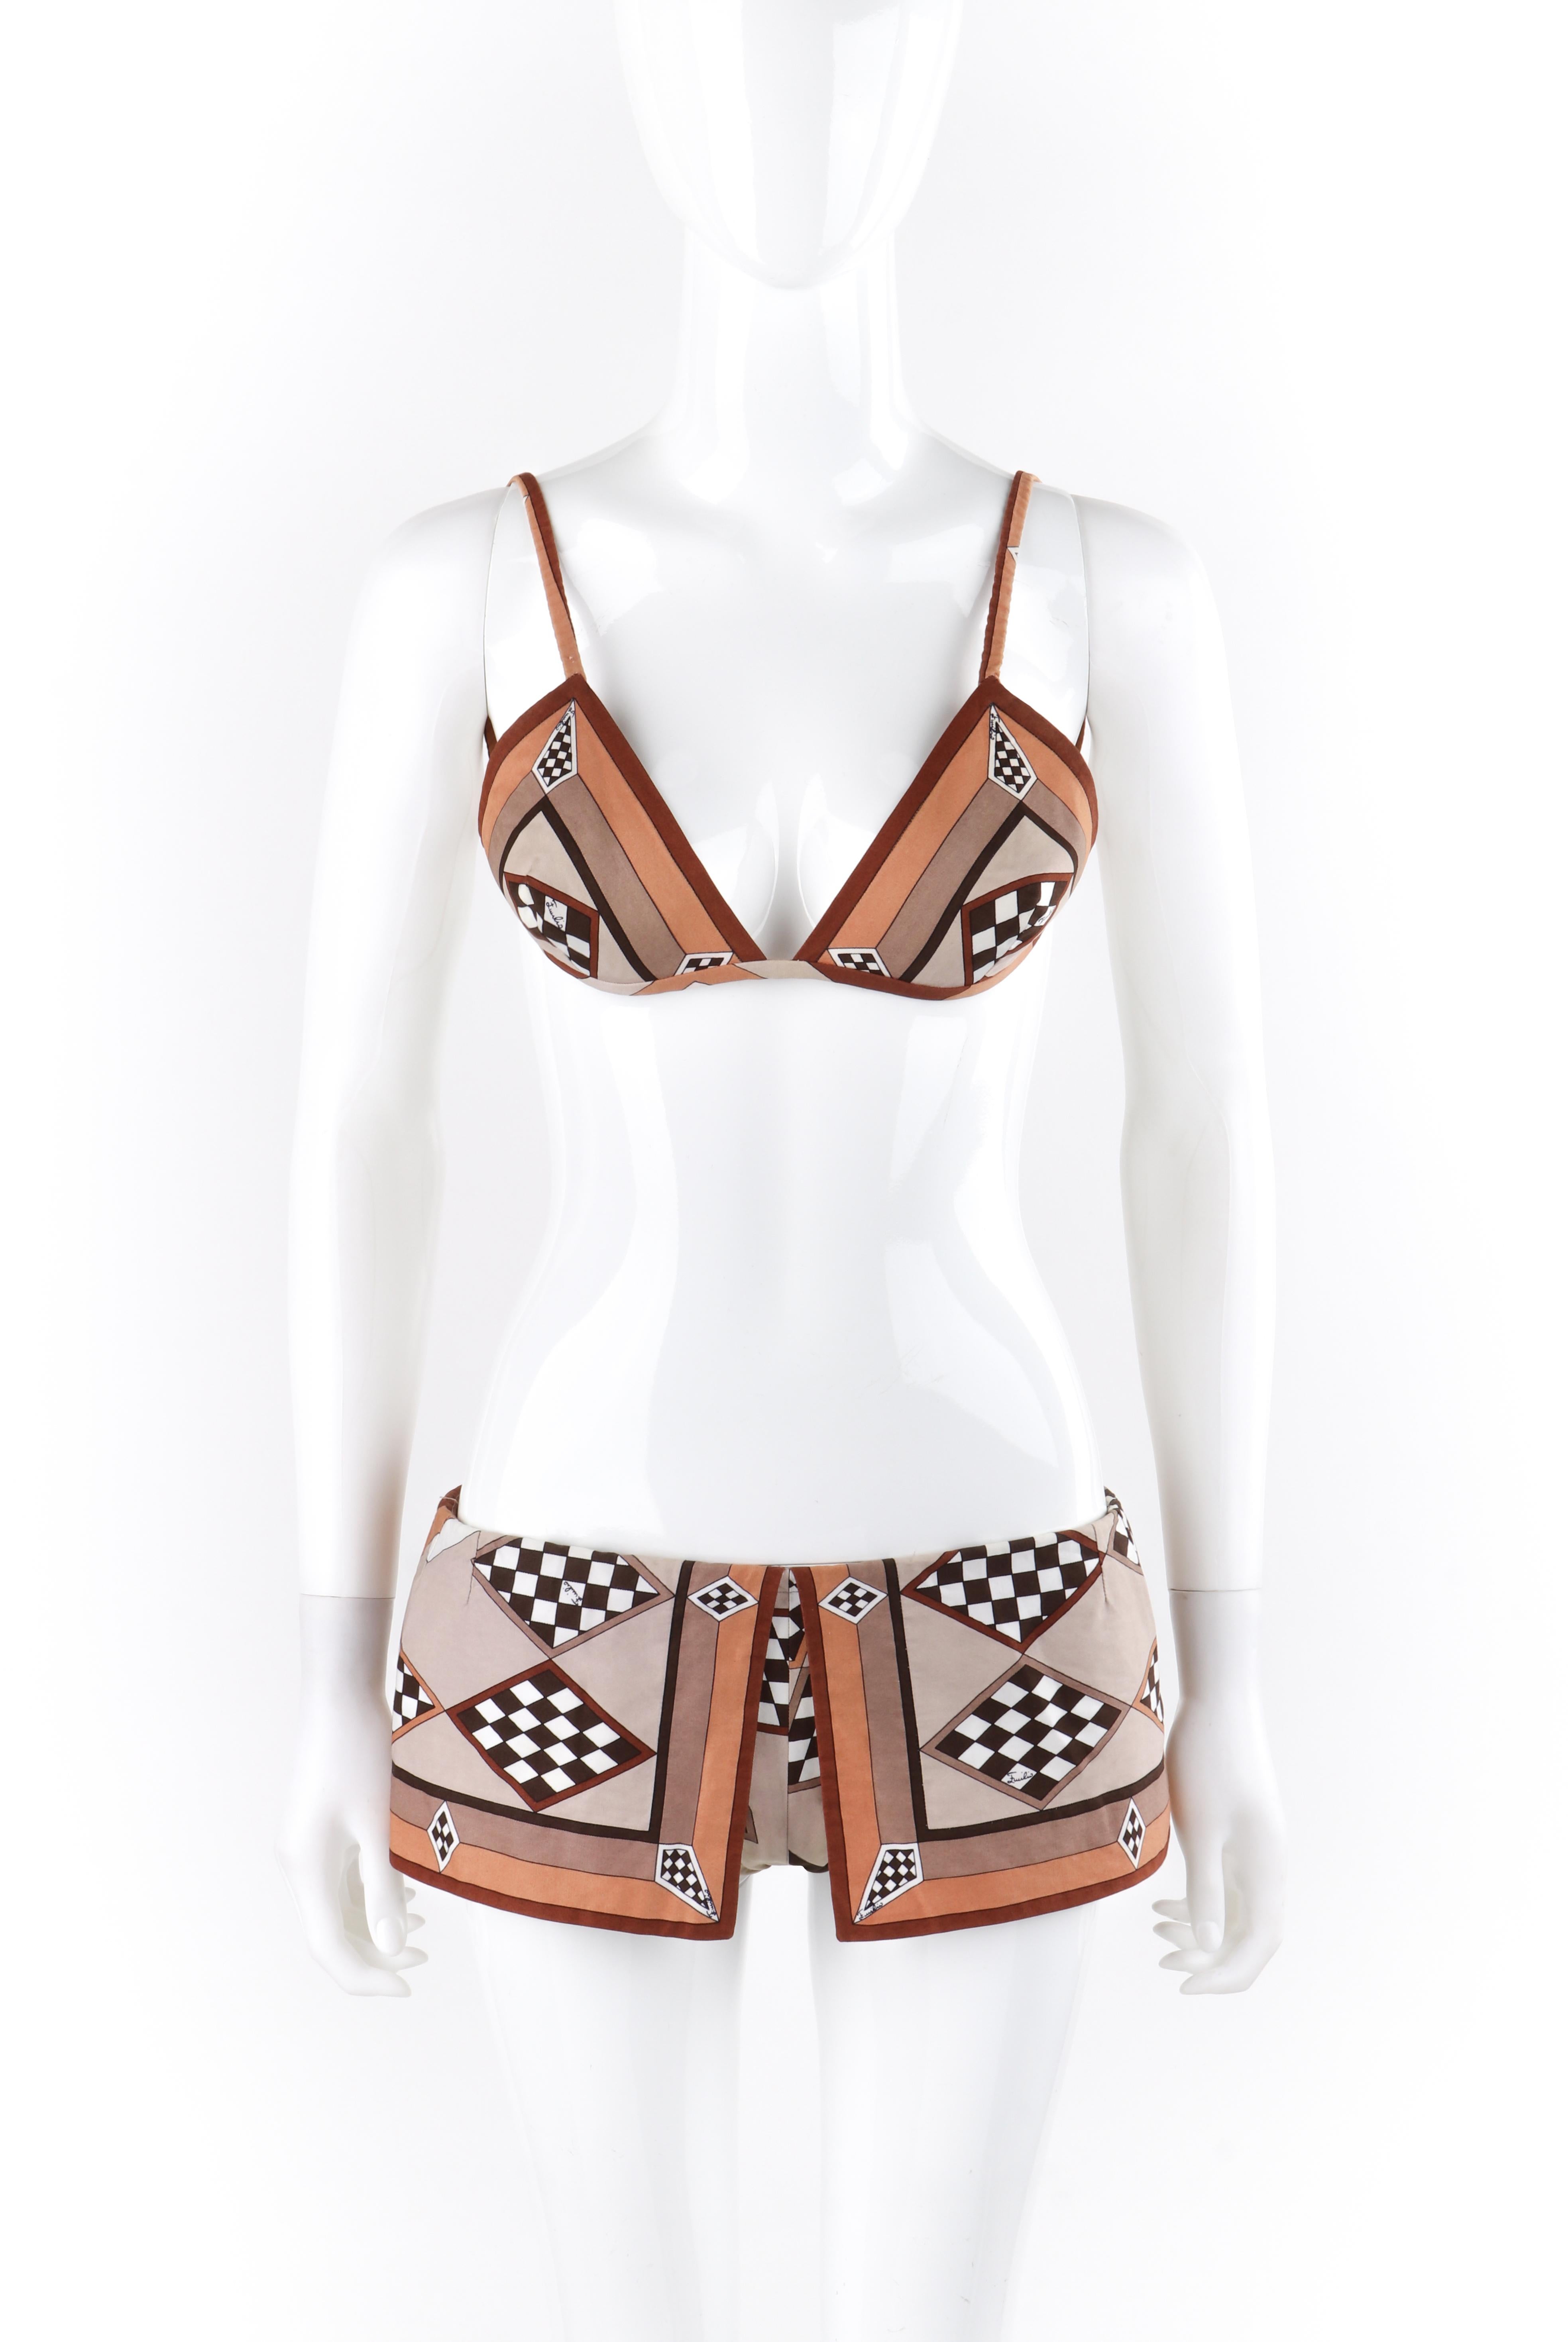 EMILIO PUCCI c.1970’s Brown White Checkered Geometric Shape 2 Pc Bikini Swimsuit
Circa: 1970’s 
Label(s): Emilio Pucci, Exclusively for Saks Fifth Avenue
Designer: Emilio Pucci 
Style: Bikini
Color(s): Shades of brown, white
Lined: Partial 
Marked